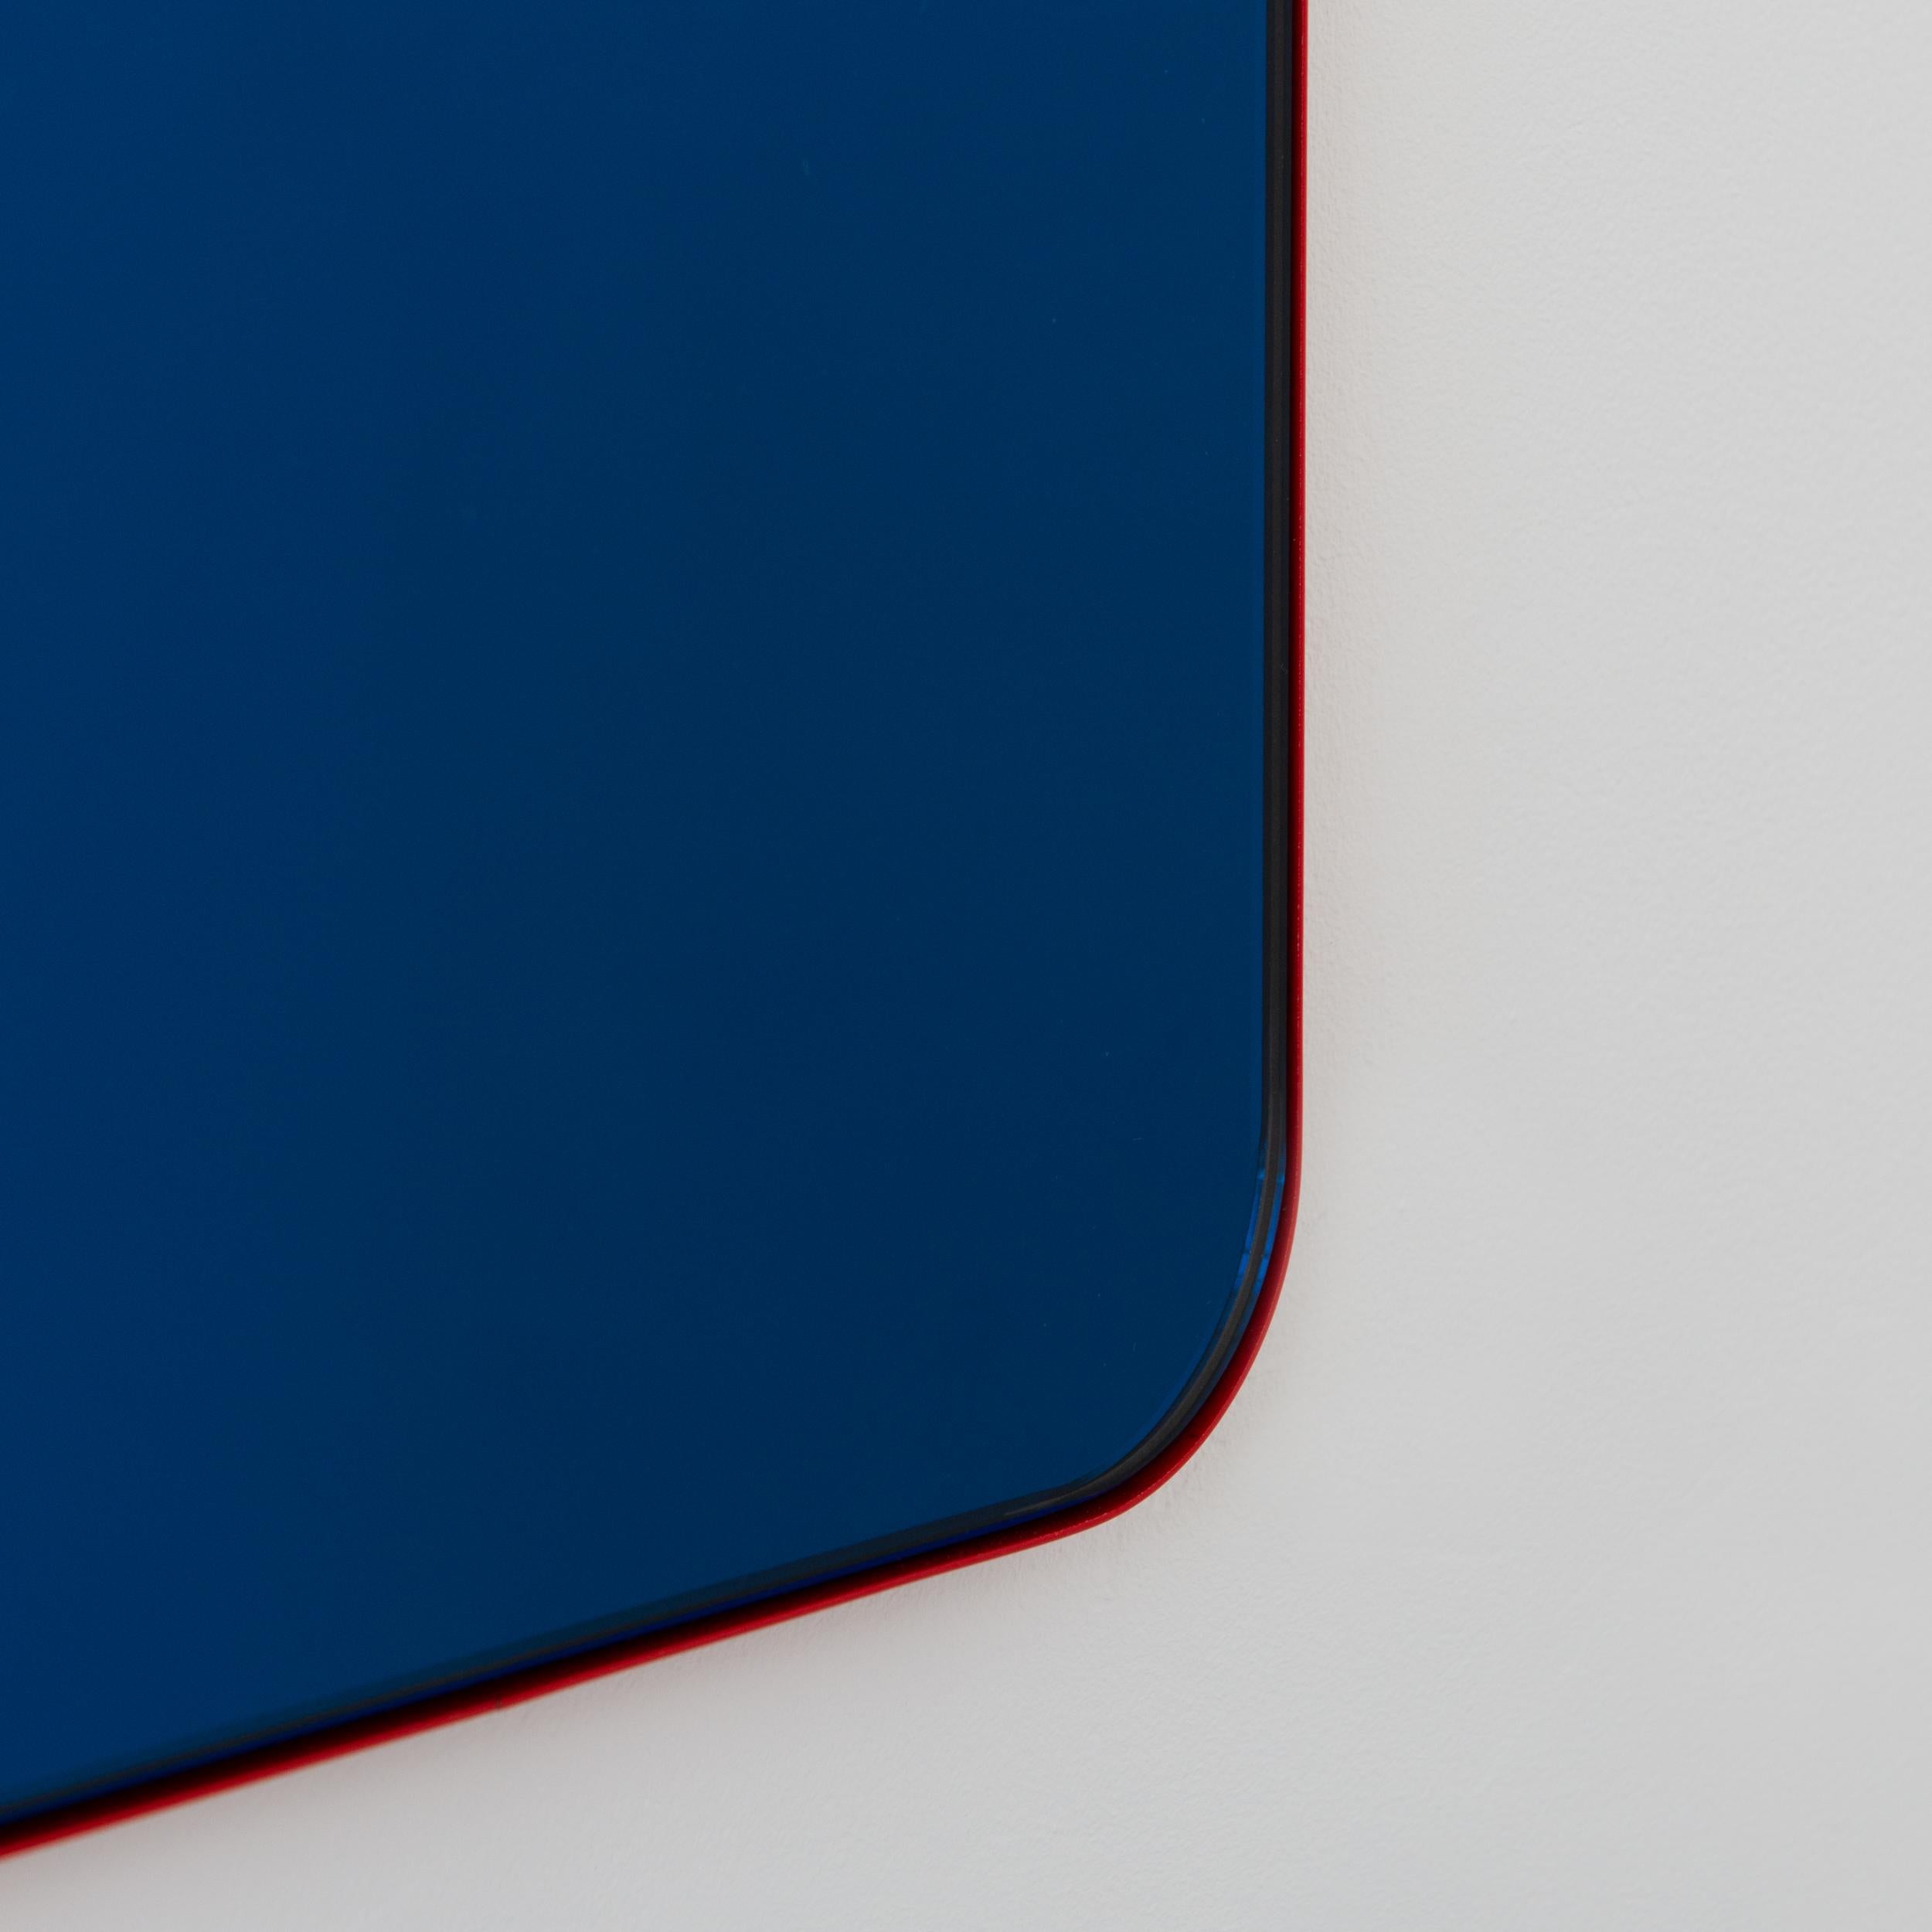 Quadris Rectangular Contemporary Blue Mirror with a Red Frame, XL For Sale 1